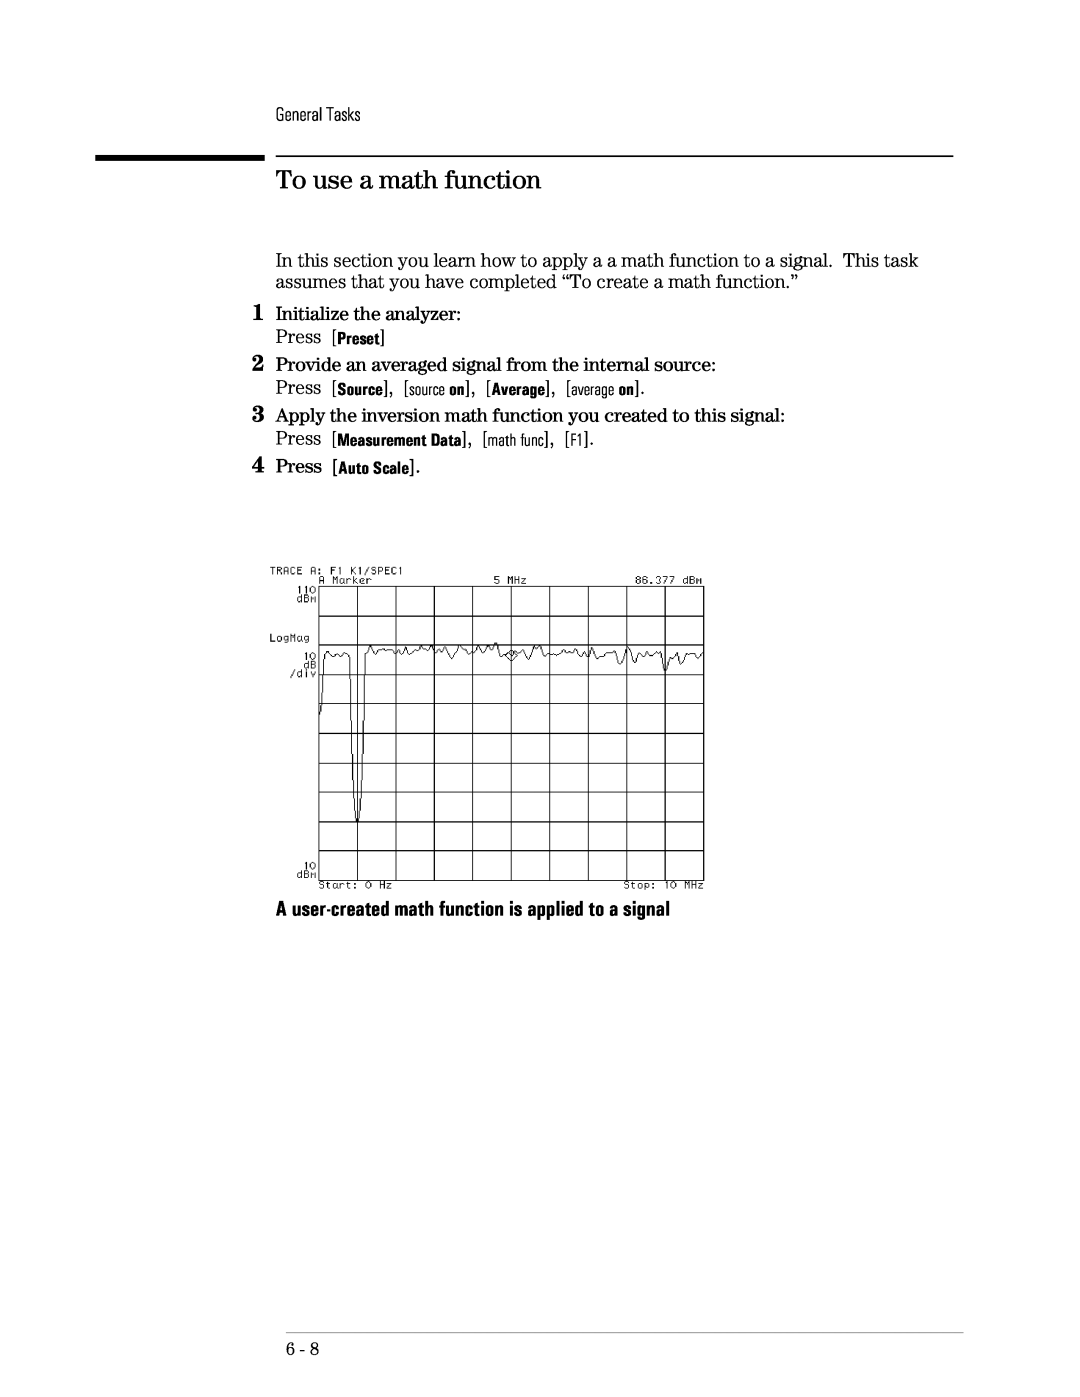 Agilent Technologies 89441A manual To use a math function, General Tasks, Press Measurement Data, math func, F1 